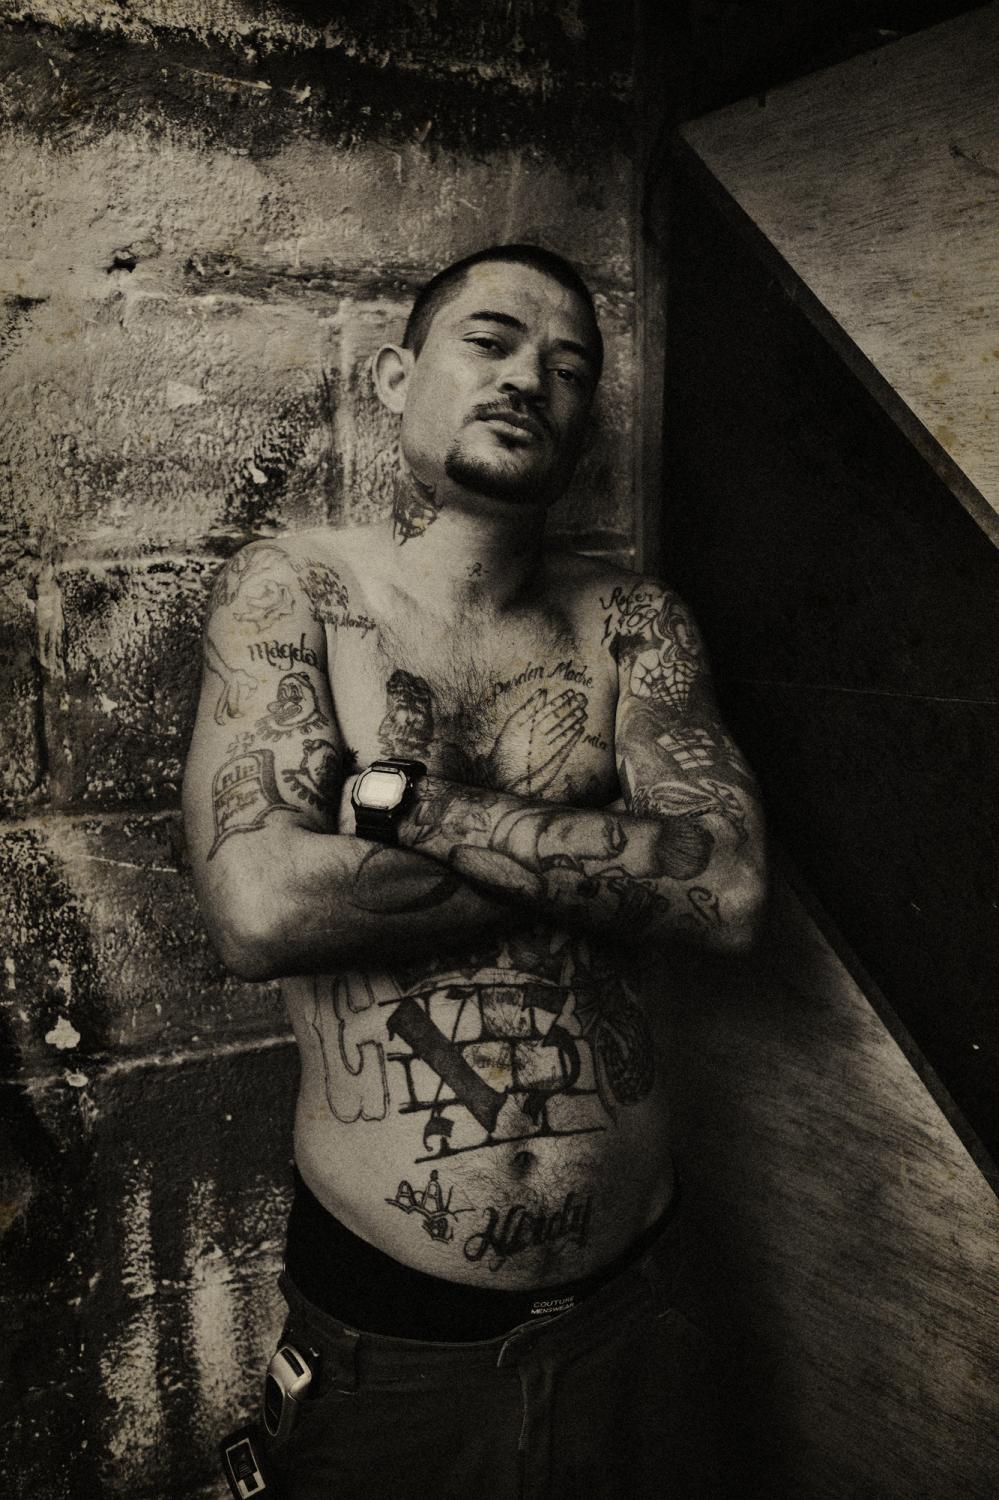 Honduras - Honduras.
February 2008.
A tattooed prisoner at San...